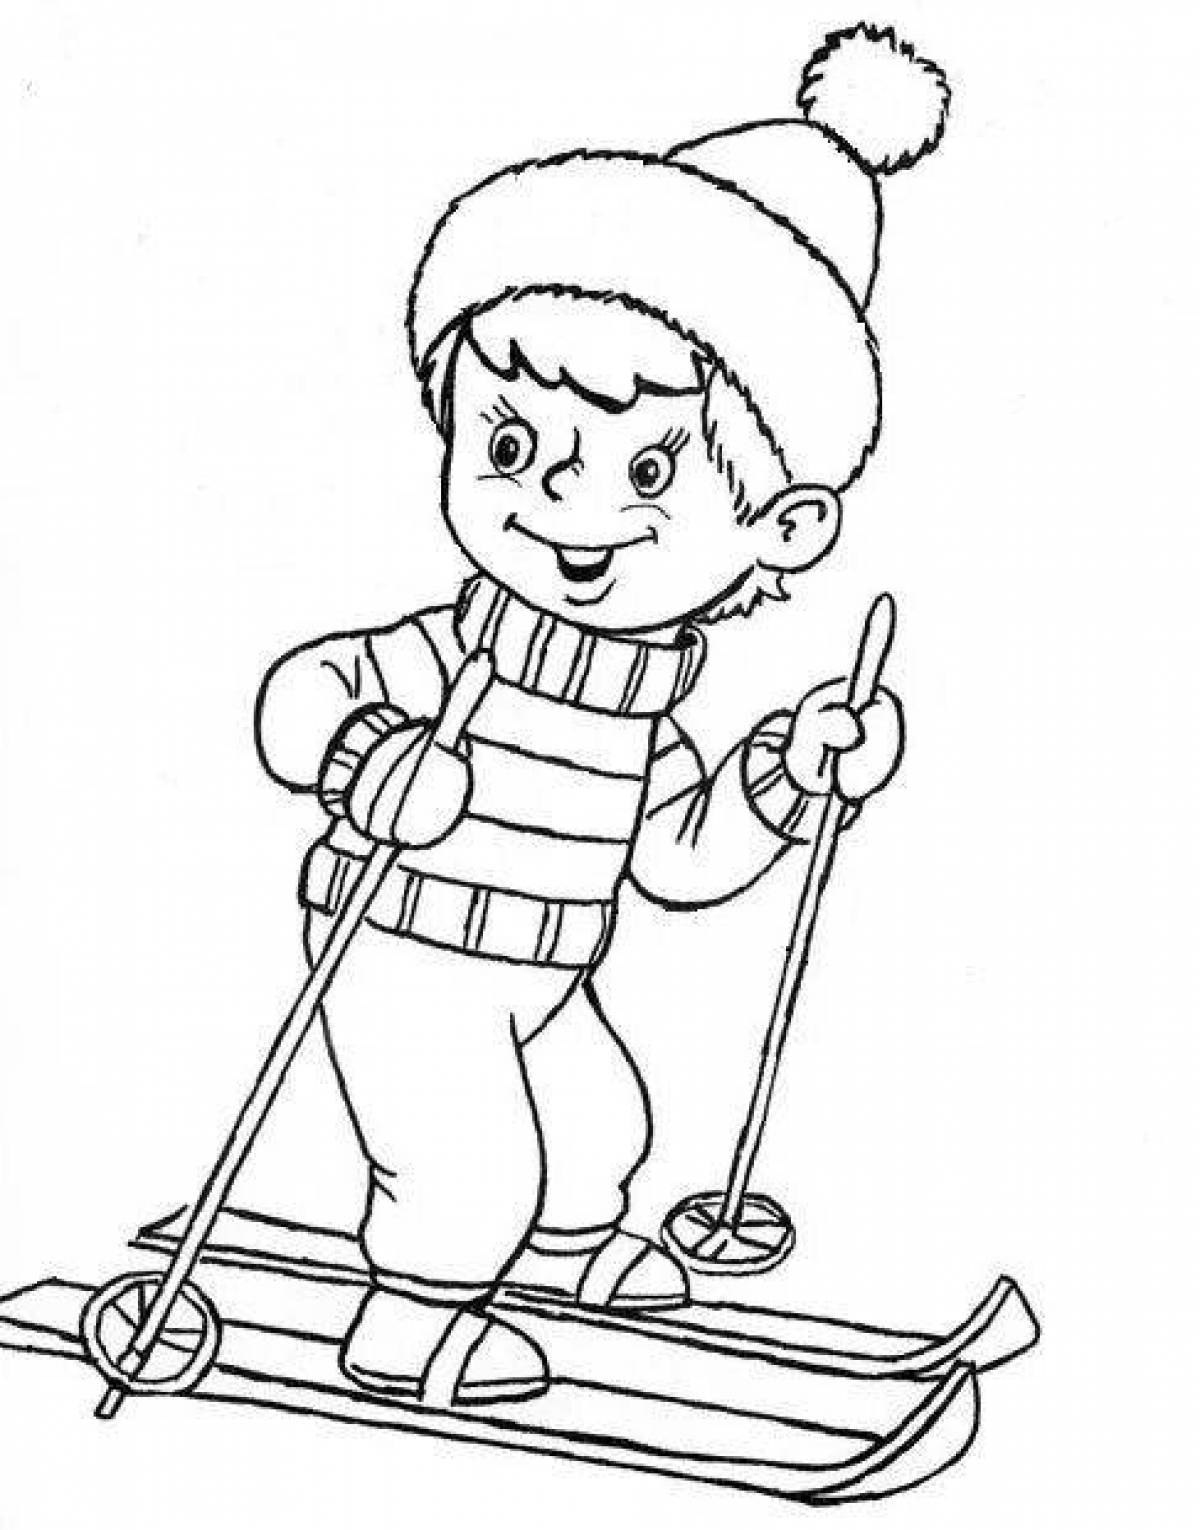 Child on skis #5